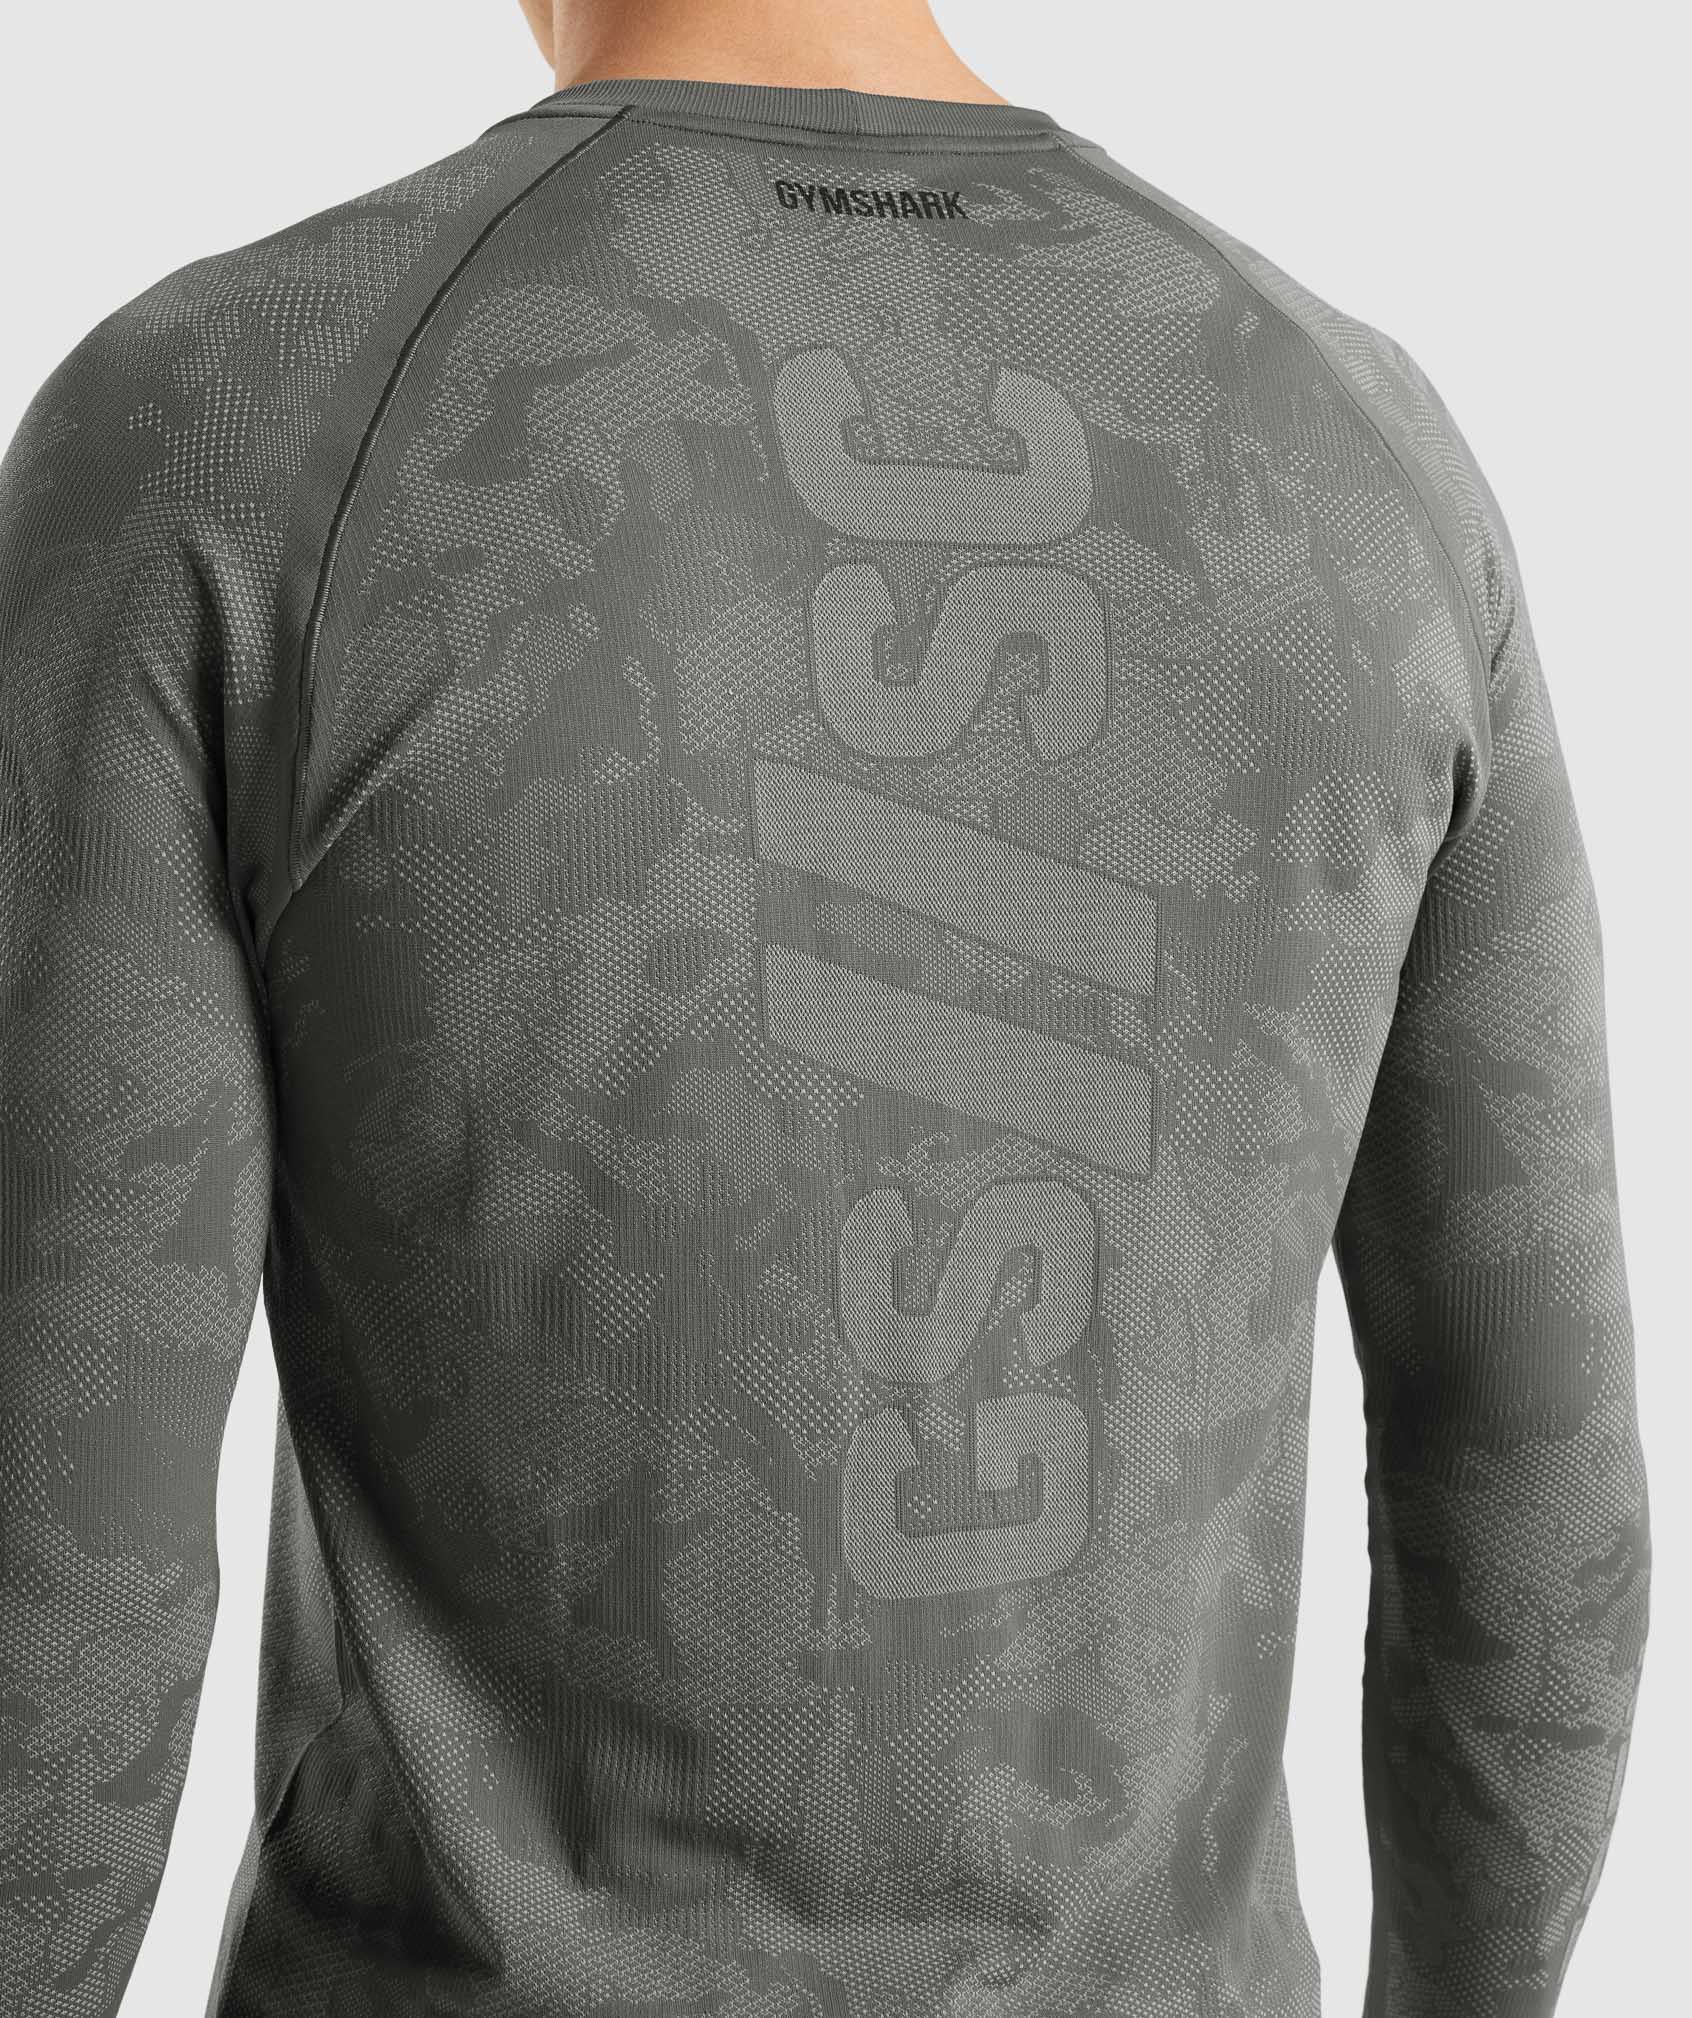 Gymshark//Steve Cook Long Sleeve Seamless T-Shirt in Charcoal Grey/Smokey Grey - view 5